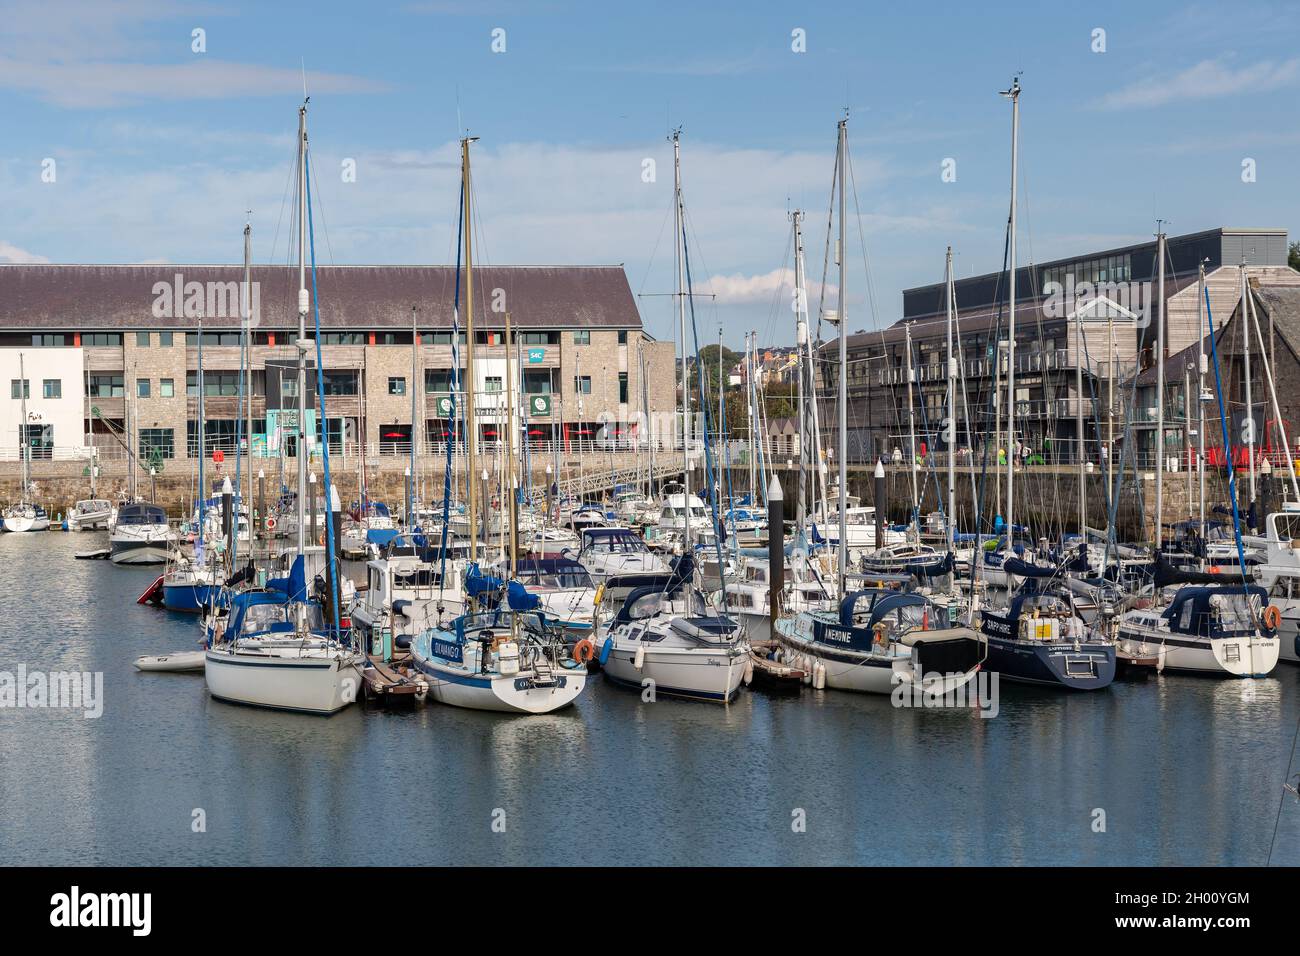 Caernarfon, Wales, UK: Victoria dock marina with moored sailing boats and yachts, adjacent to the Menai strait. Stock Photo